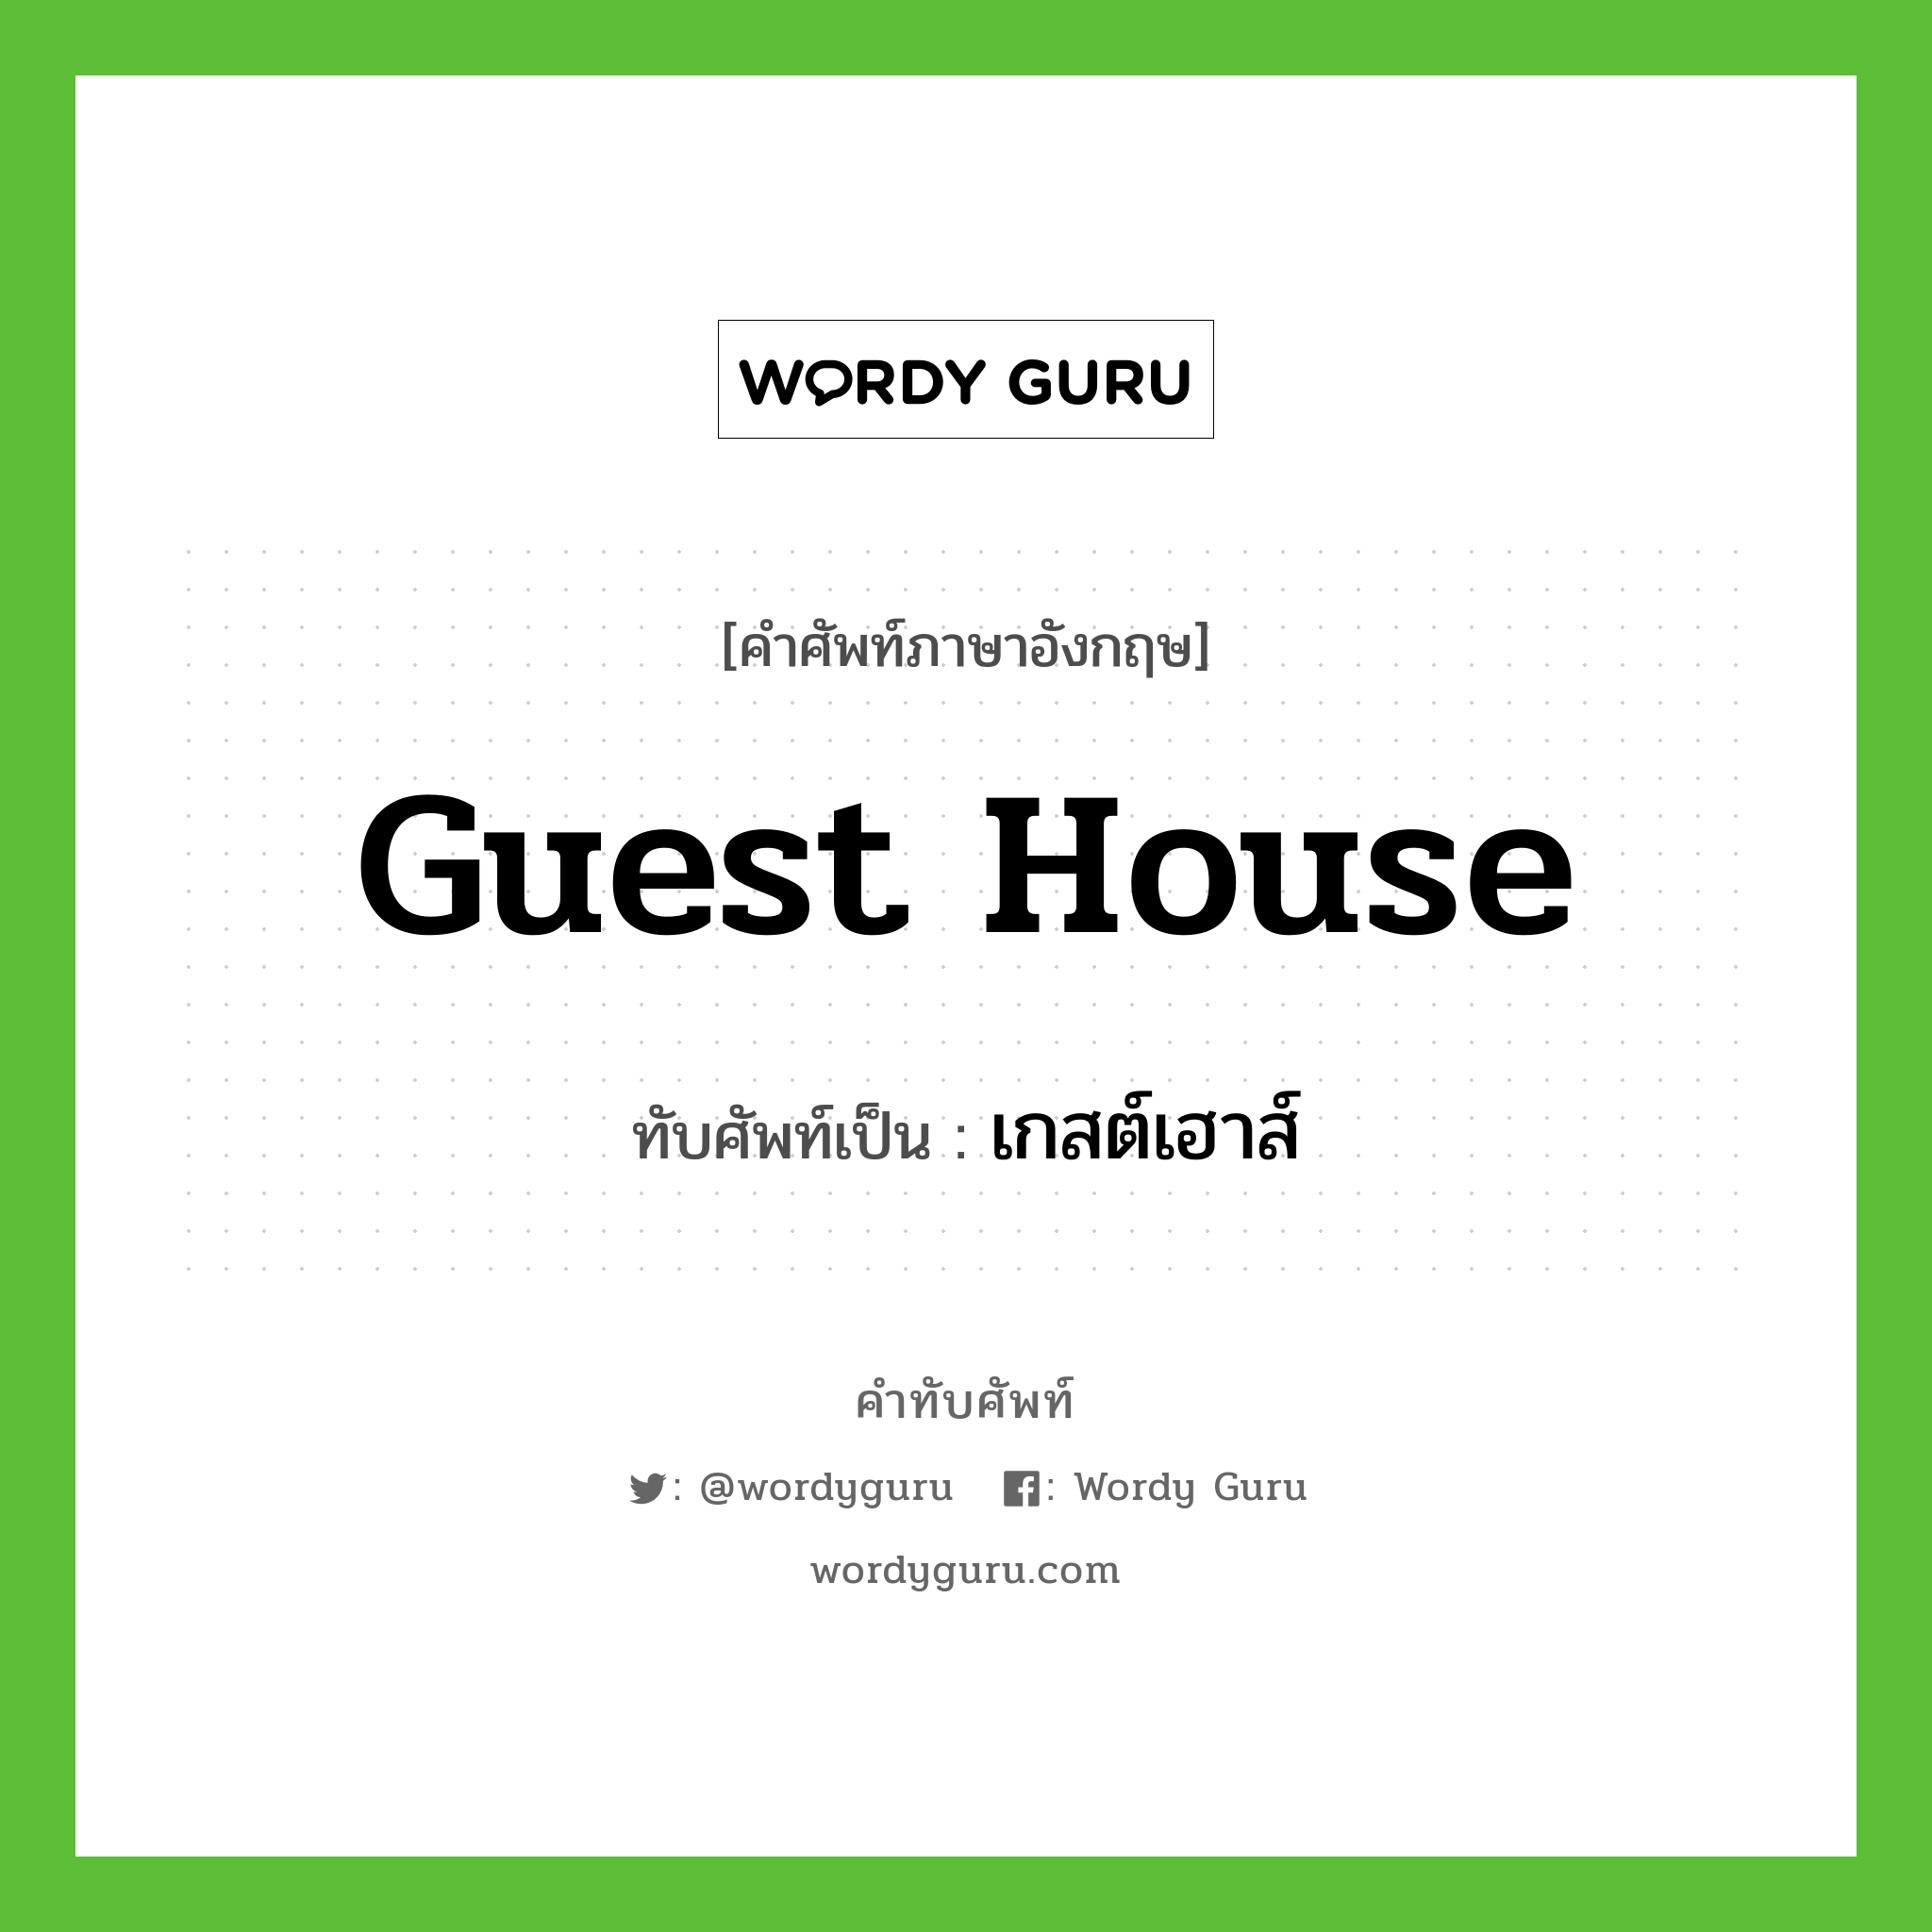 guest house เขียนเป็นคำไทยว่าอะไร?, คำศัพท์ภาษาอังกฤษ guest house ทับศัพท์เป็น เกสต์เฮาส์